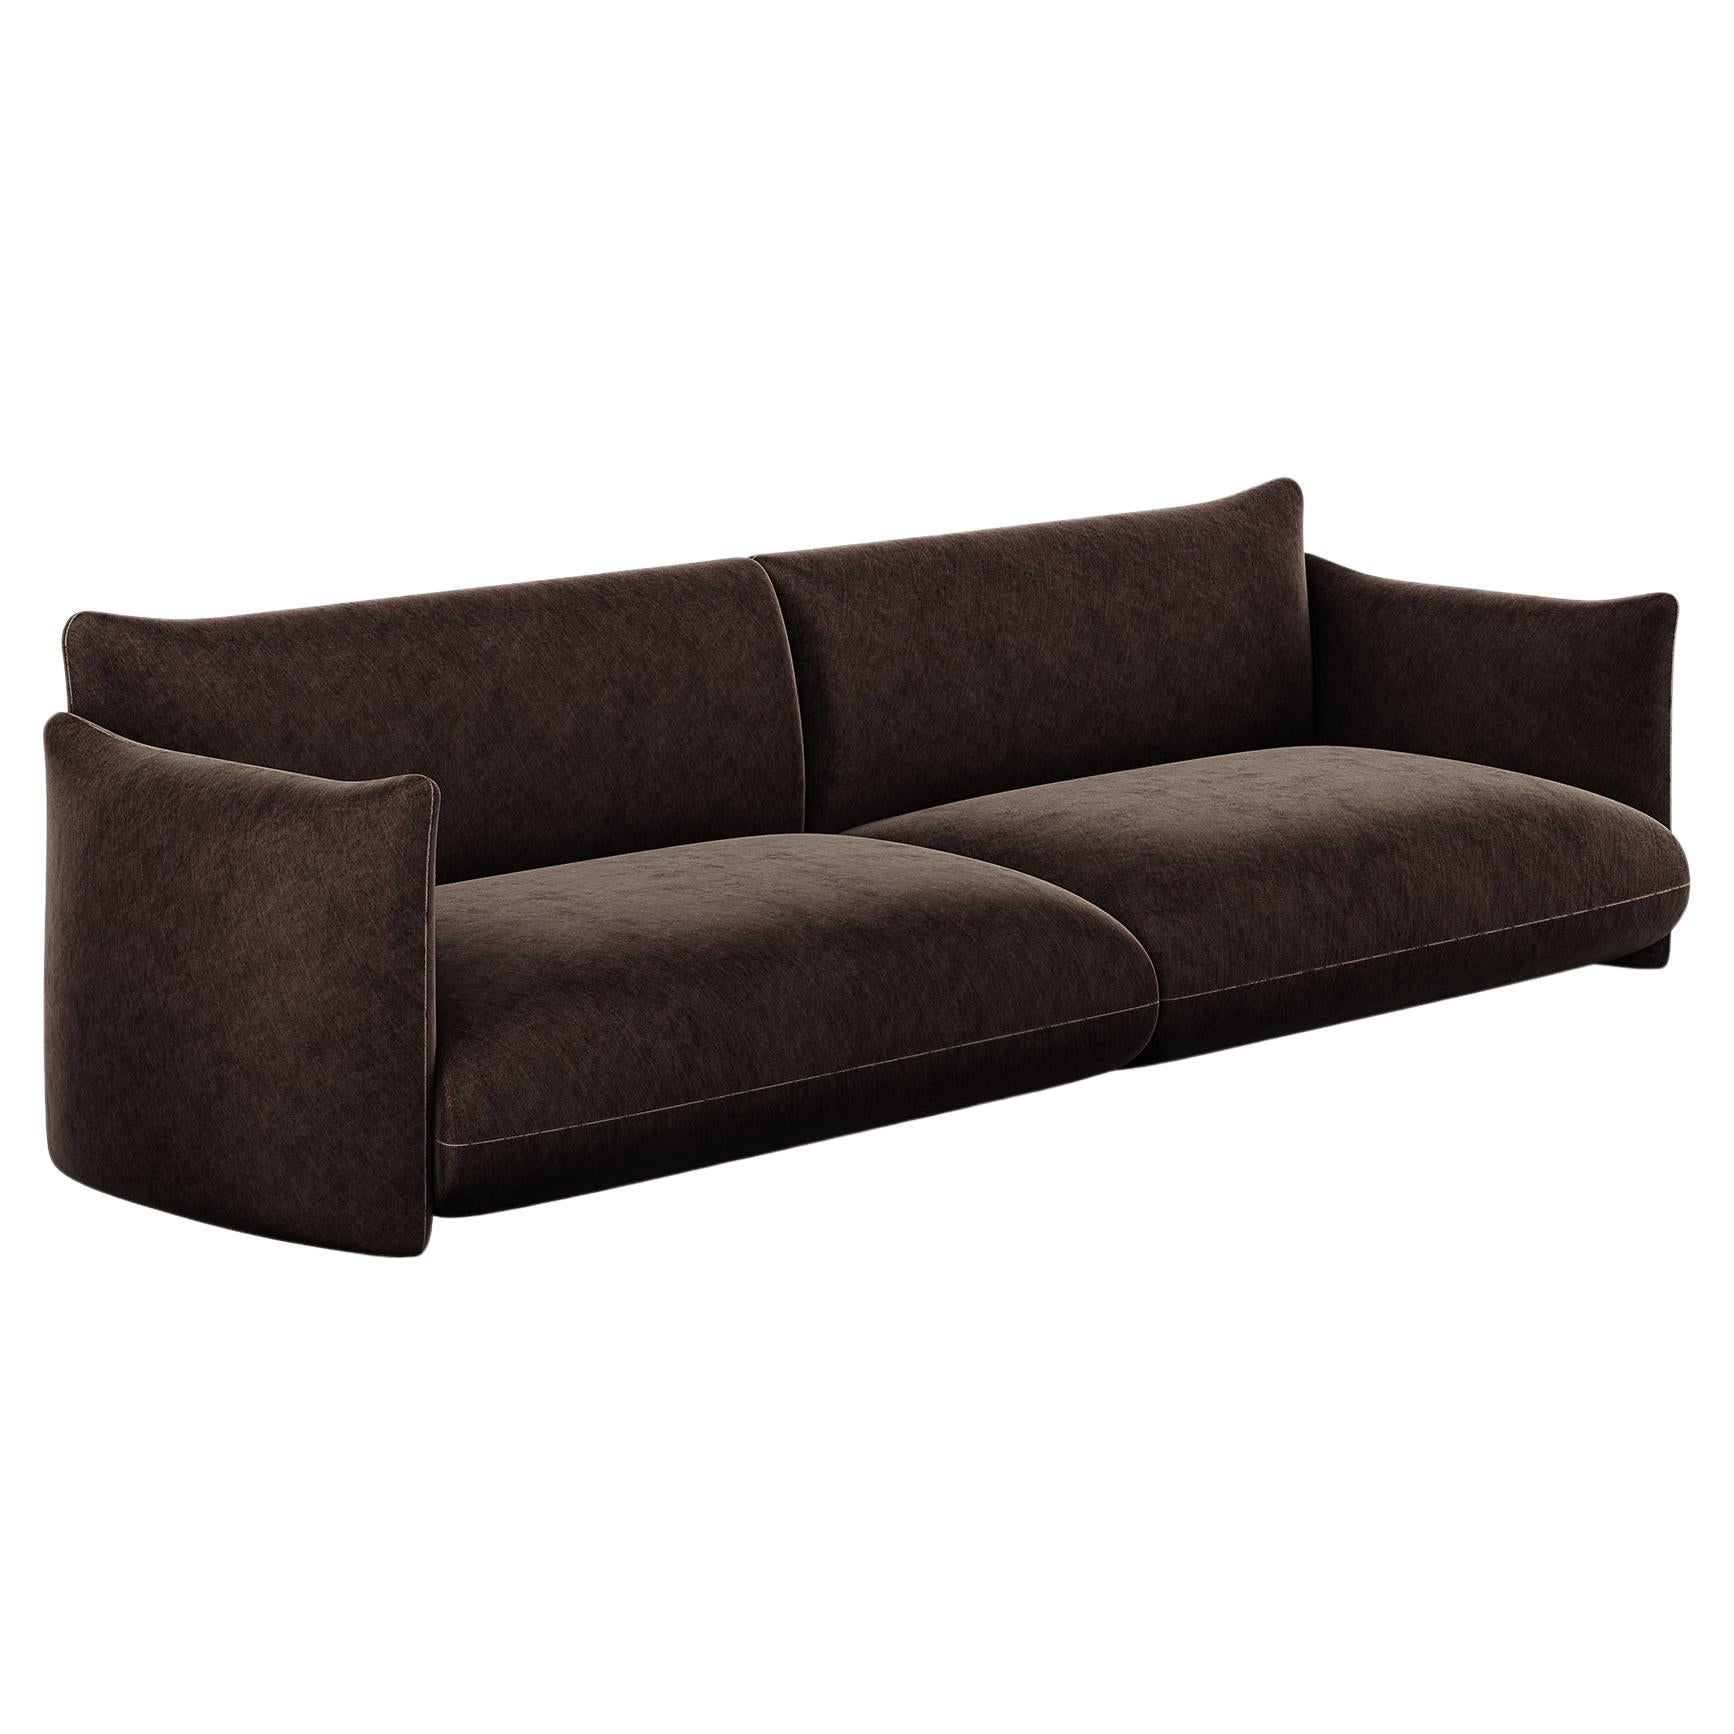 Minimalist Modern Customizable Sofa Upholstered in Dark Brown Chocolat Velvet